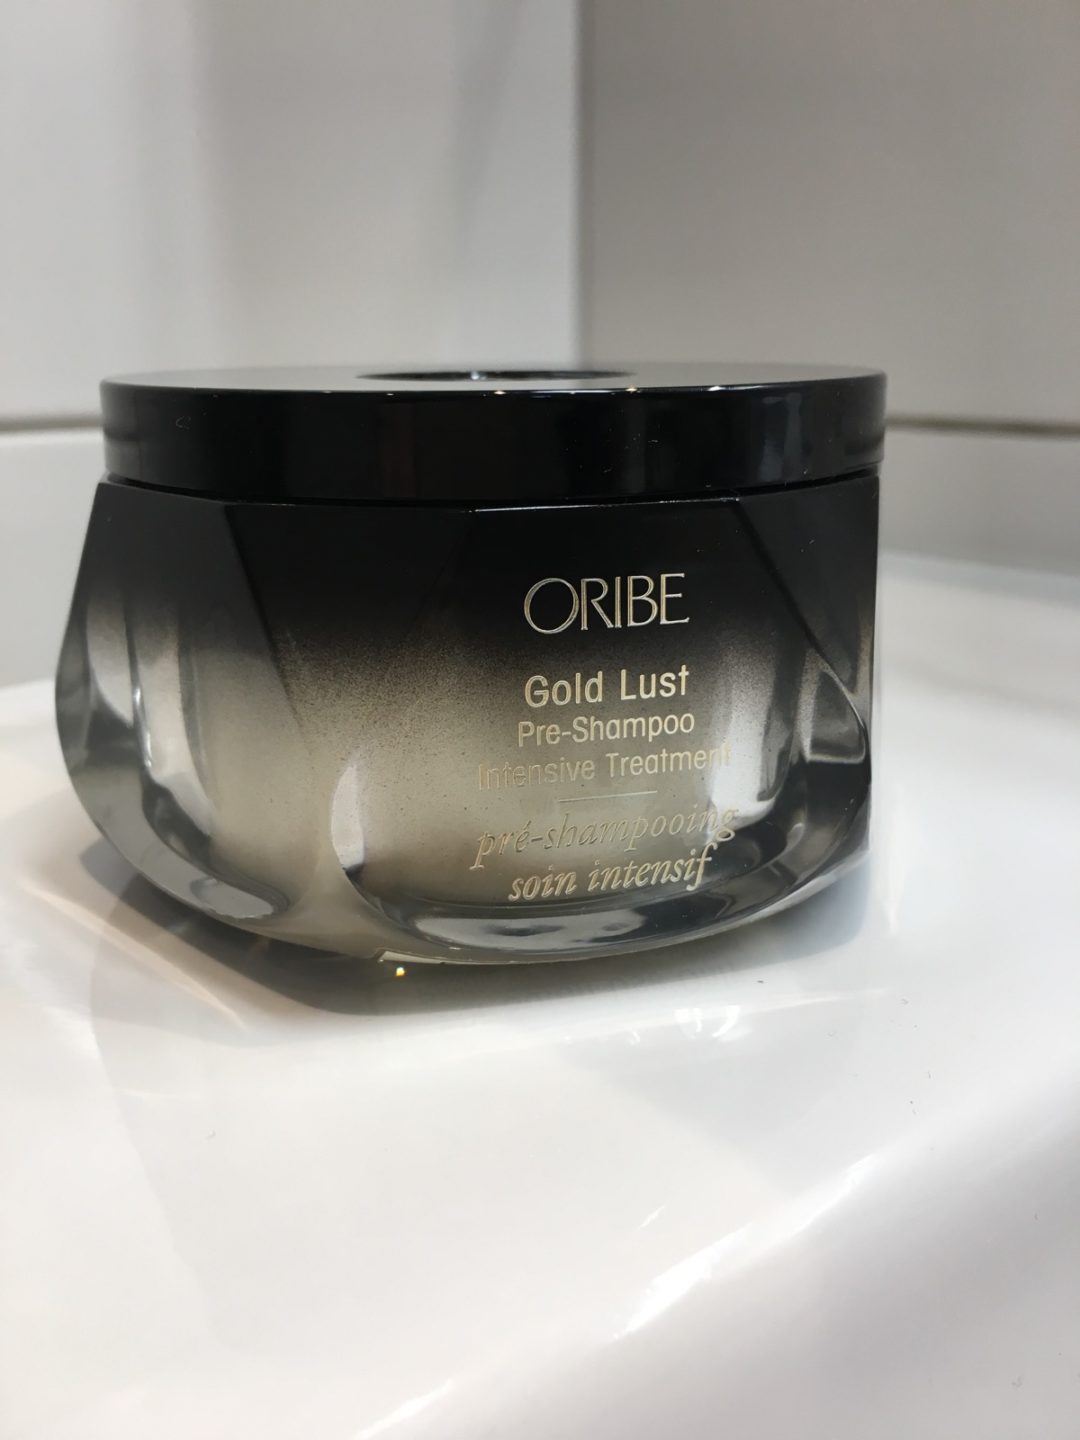 Oribe Gold Lust Pre-Shampoo, skonhetssnack.se IMG_0077